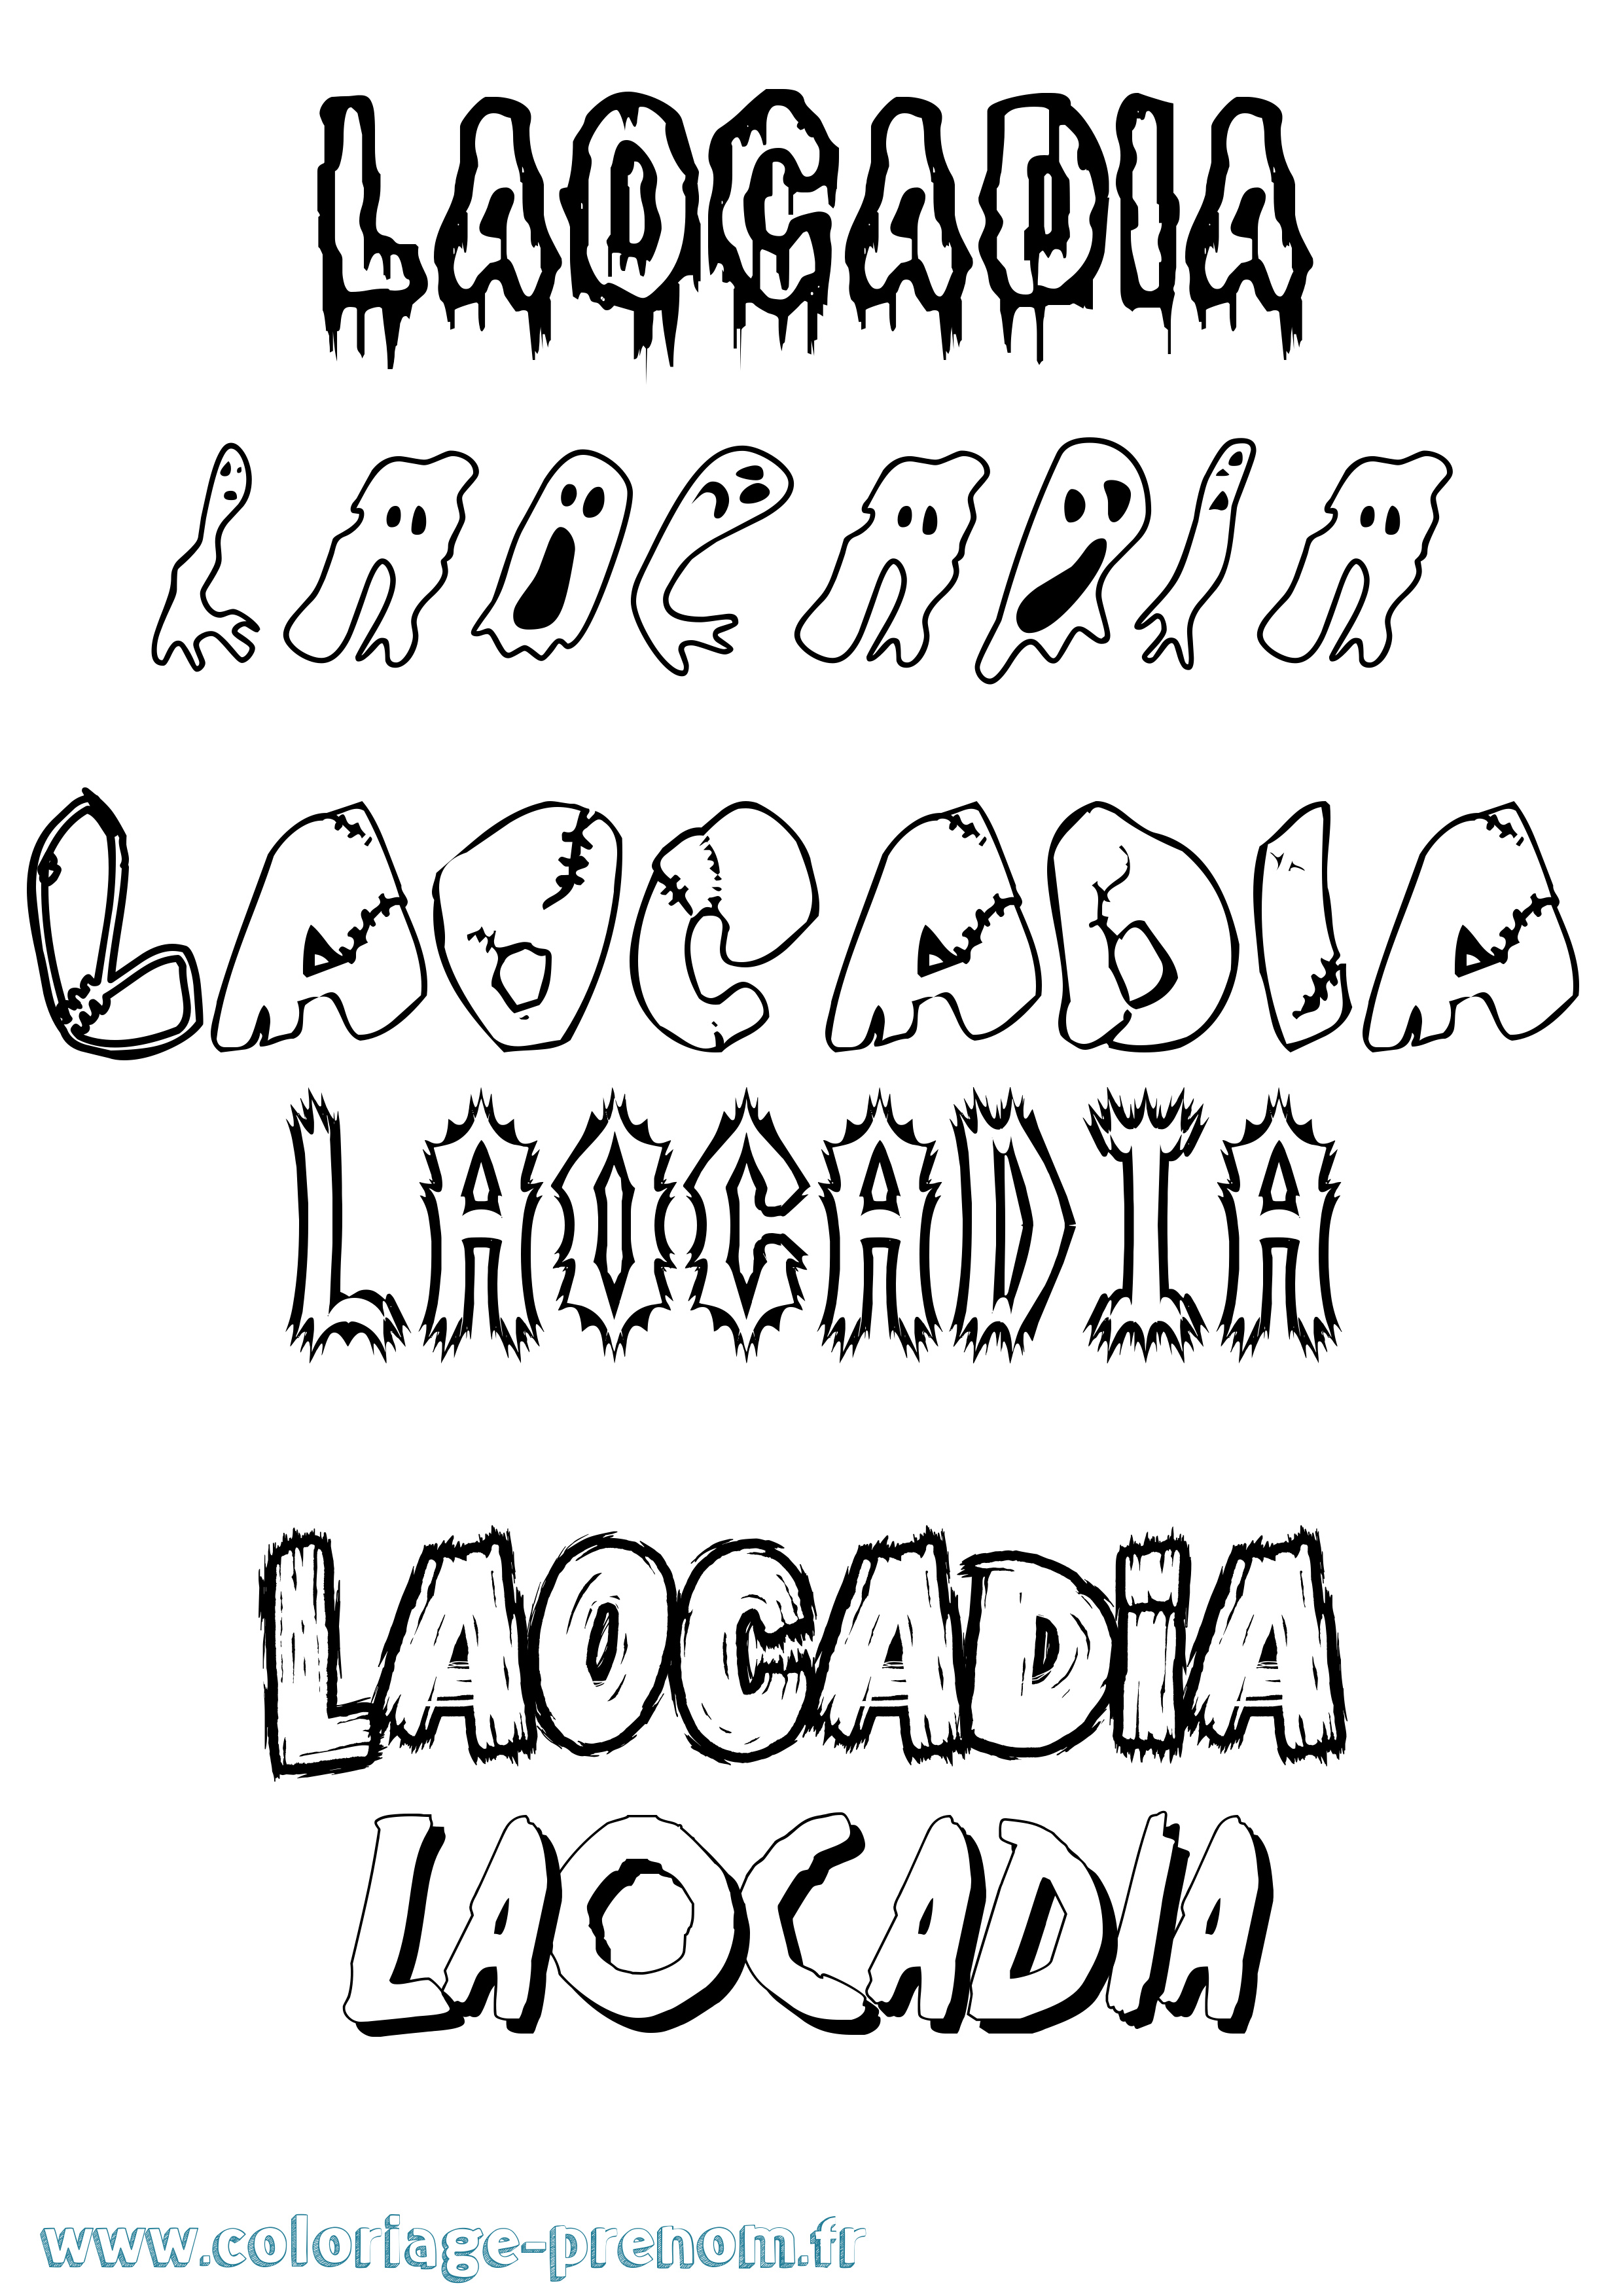 Coloriage prénom Laocadia Frisson